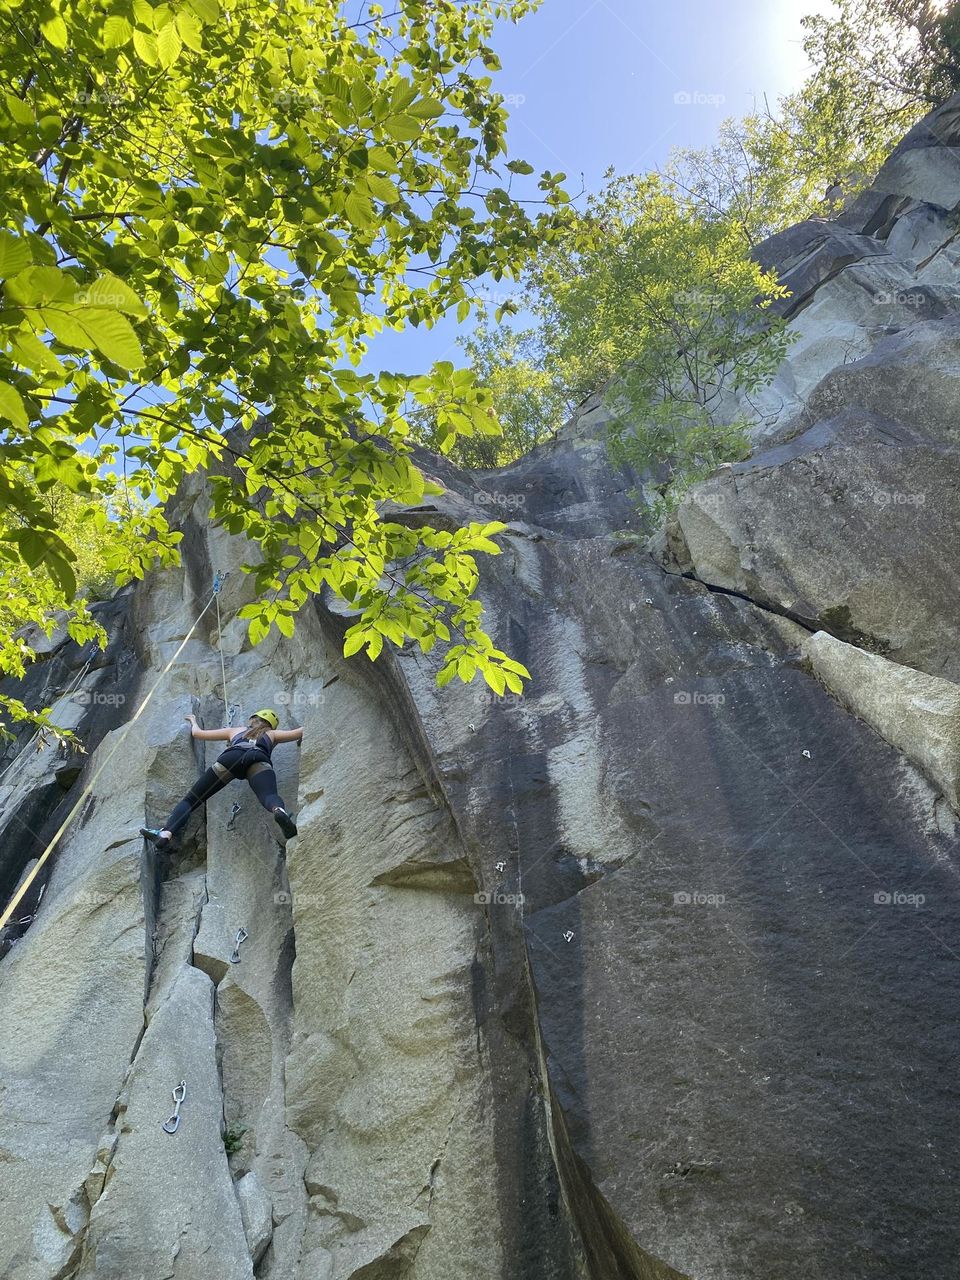 Climbing the rocks 